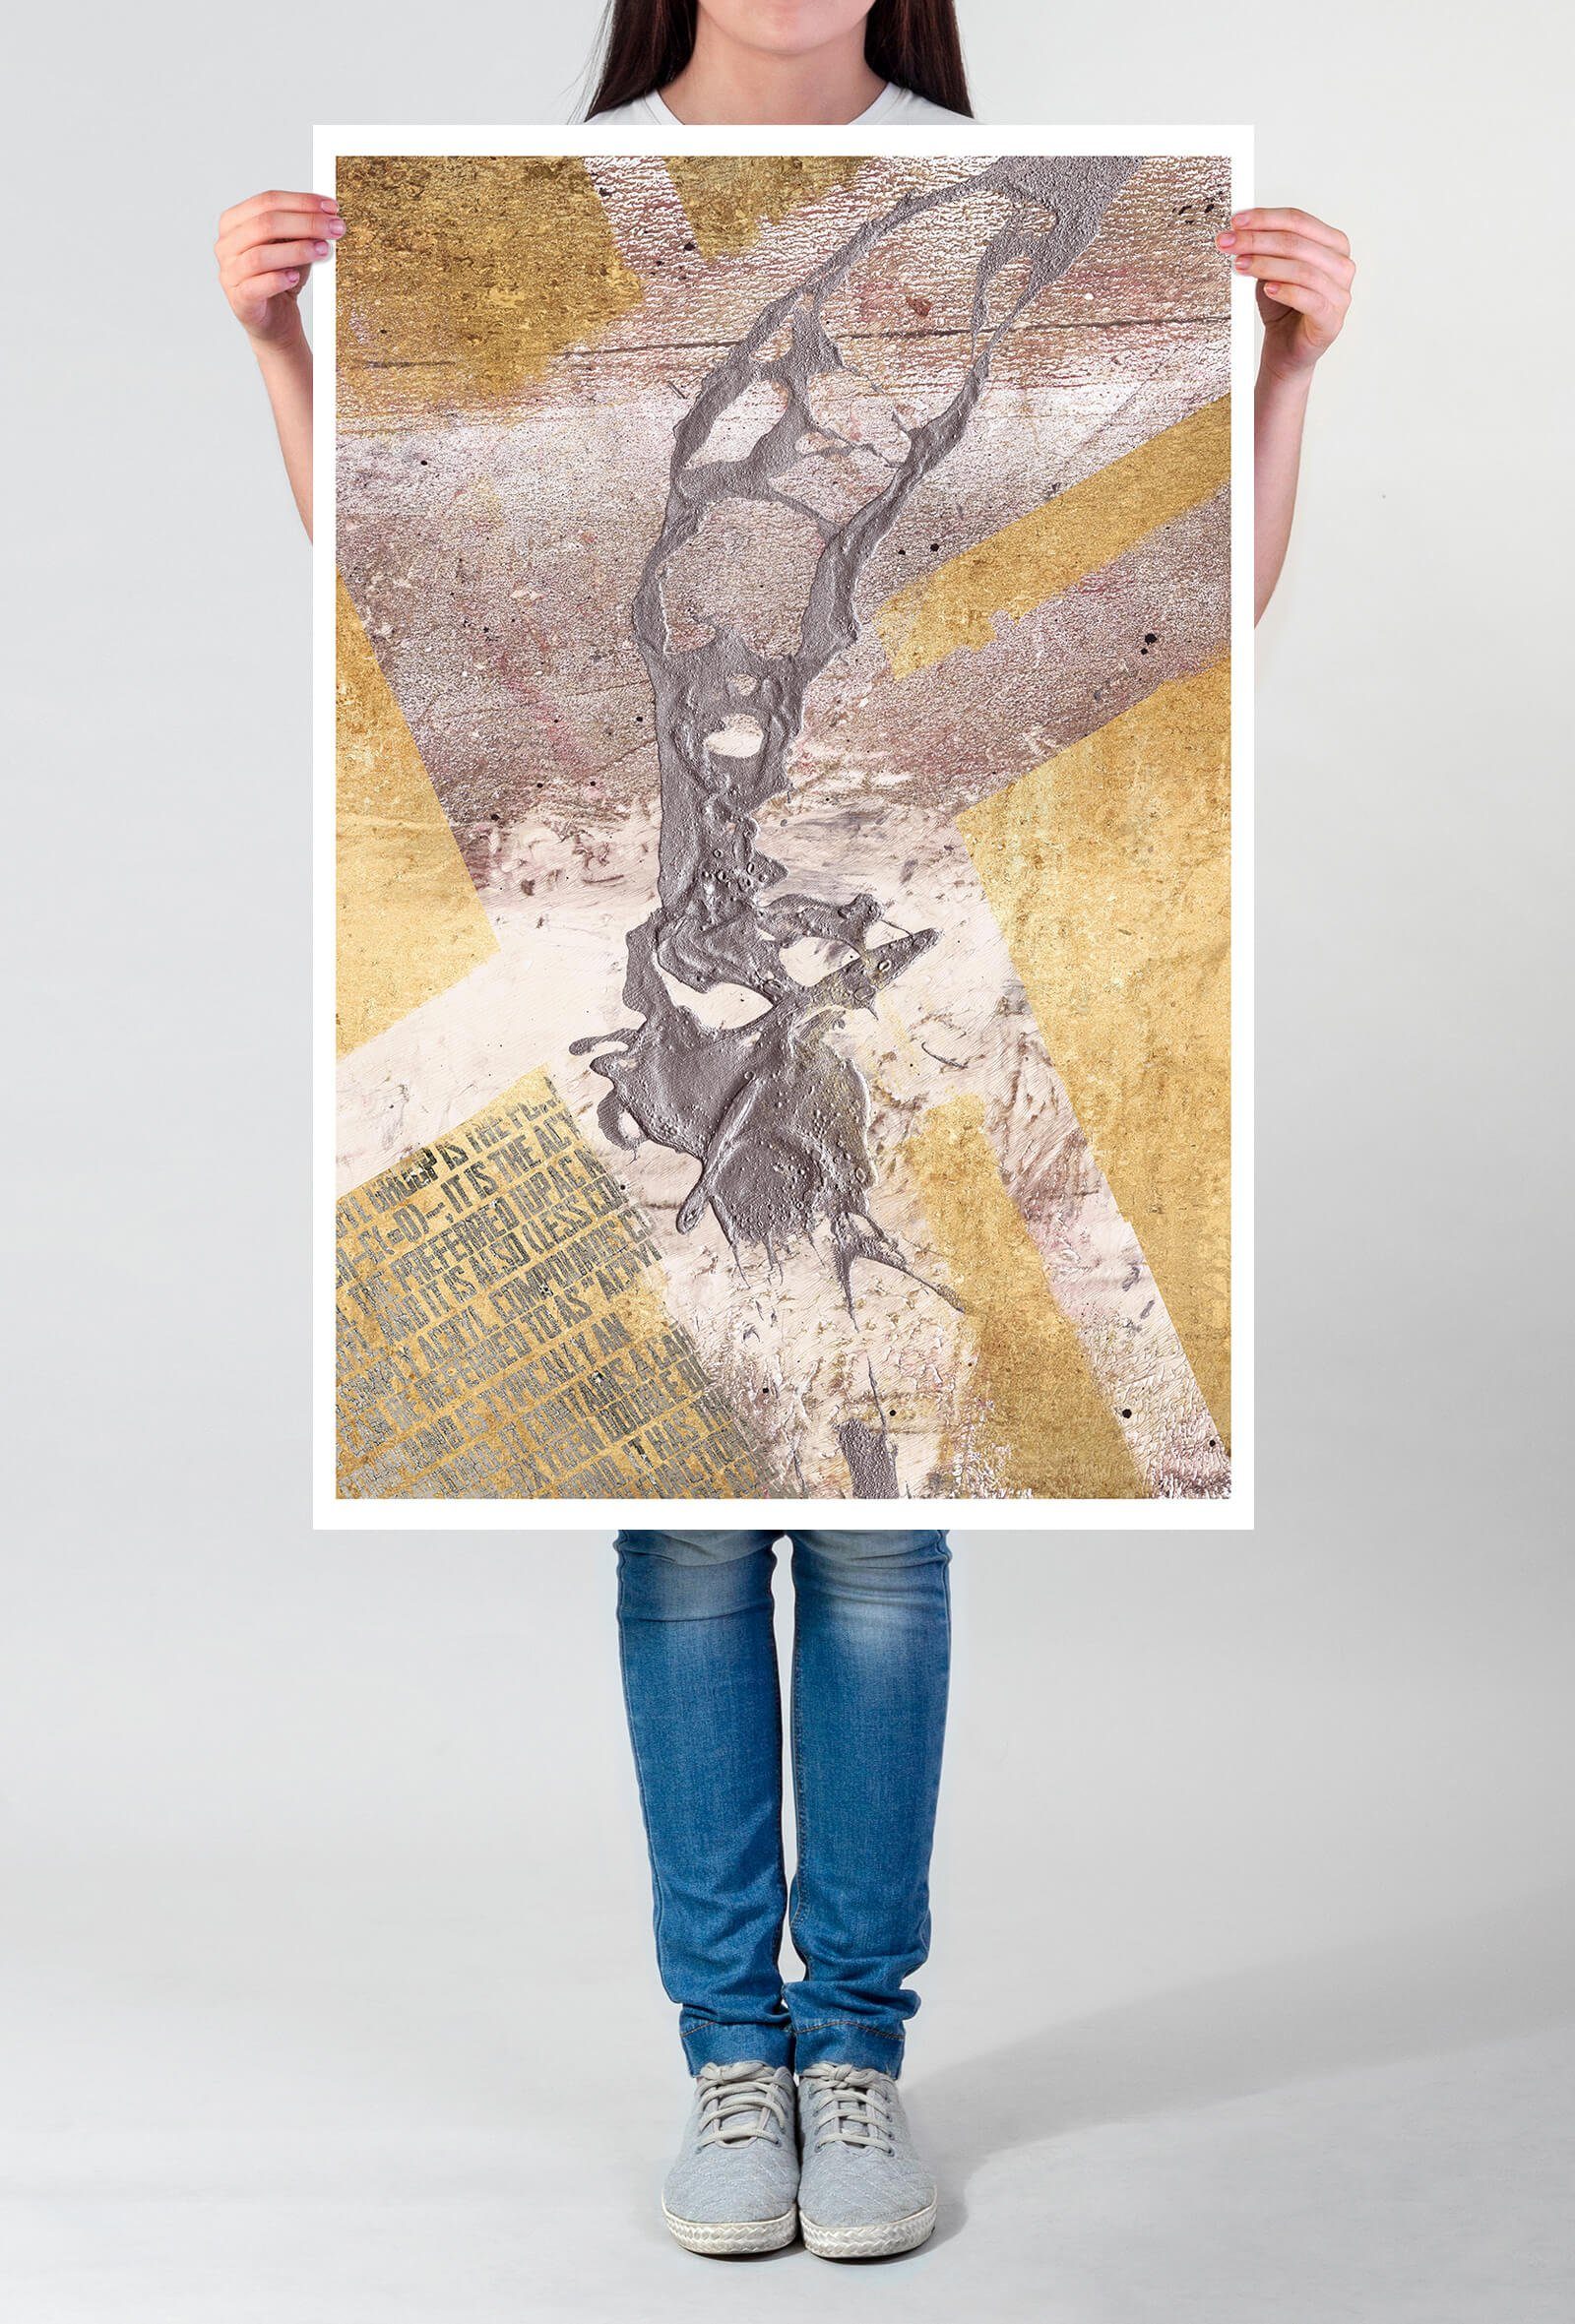 Sinus Art Poster Memo From Turner - Poster 60x90cm